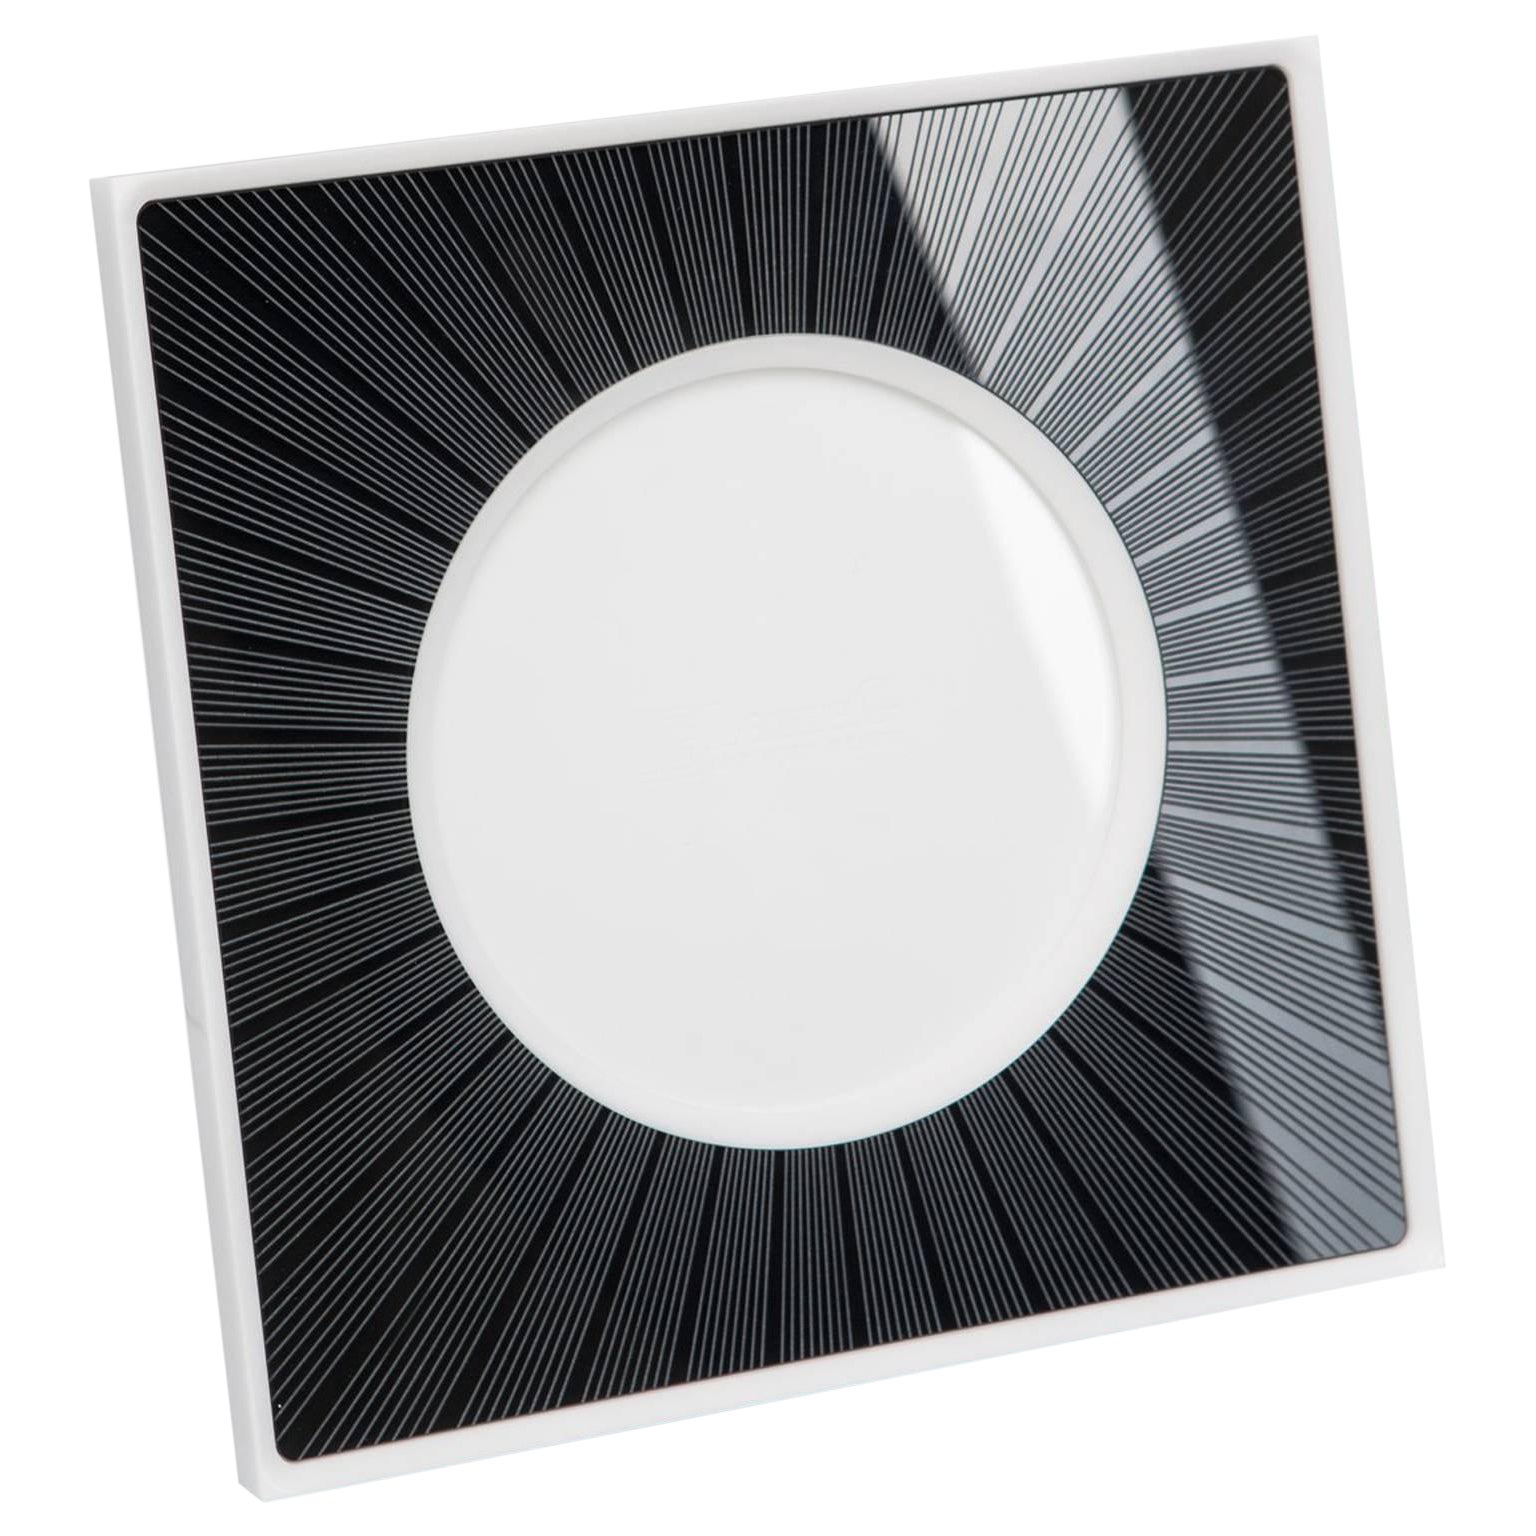 Italian Modern Design Picture Frame in Black Plexiglass, Sharing Black